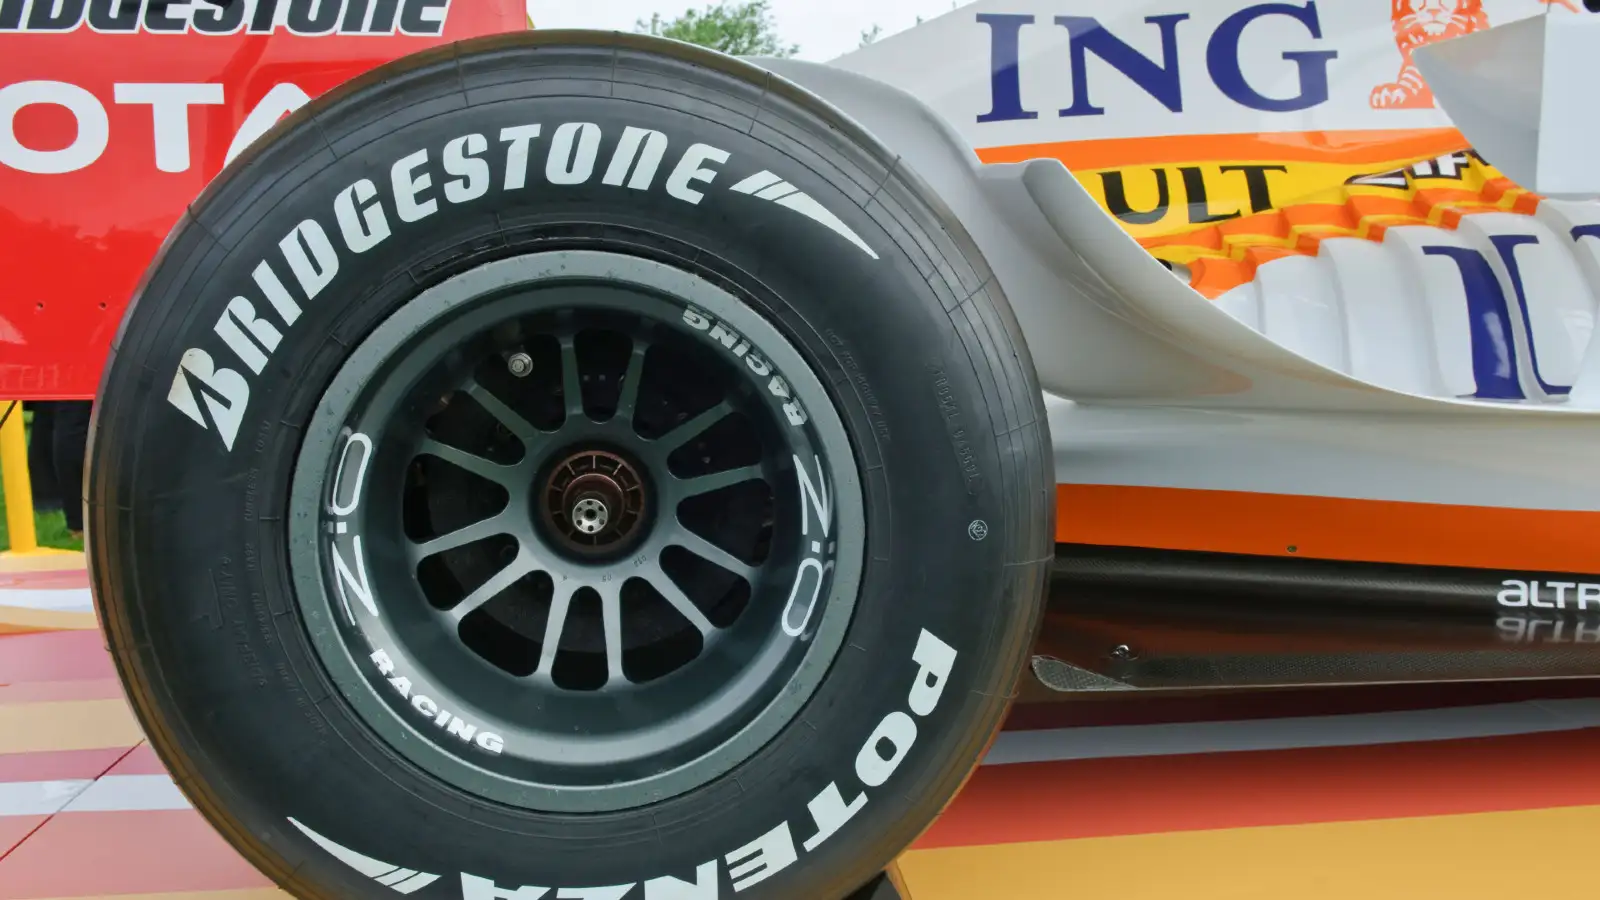 A Bridgestone Potenza tyre on a 2009 Renault F1 car.